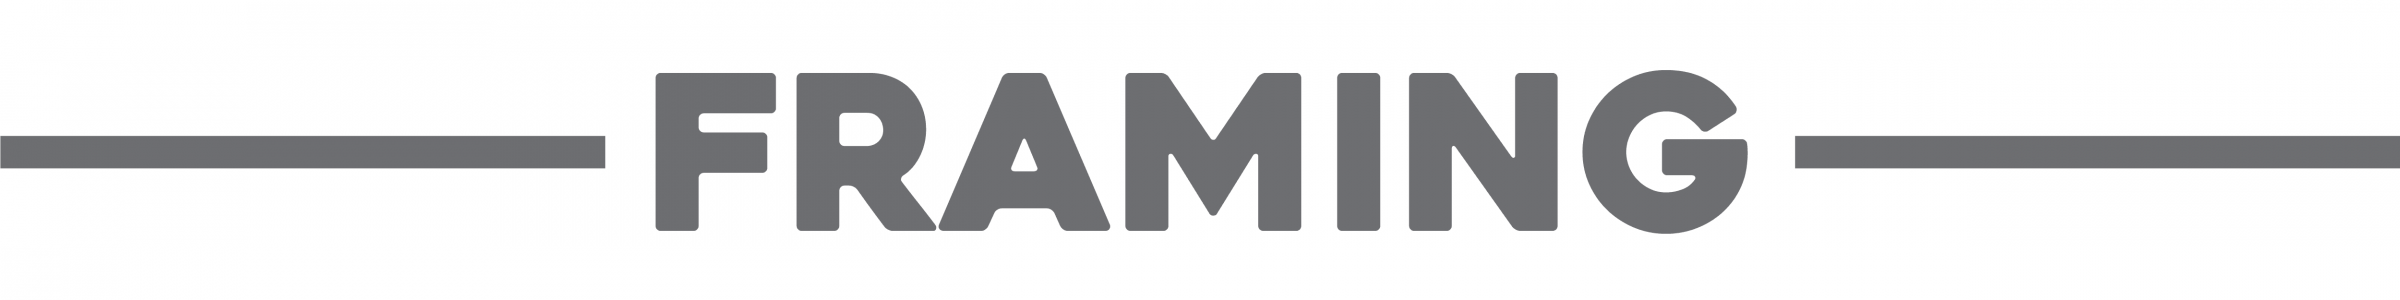 Framing logo in grey lettering.